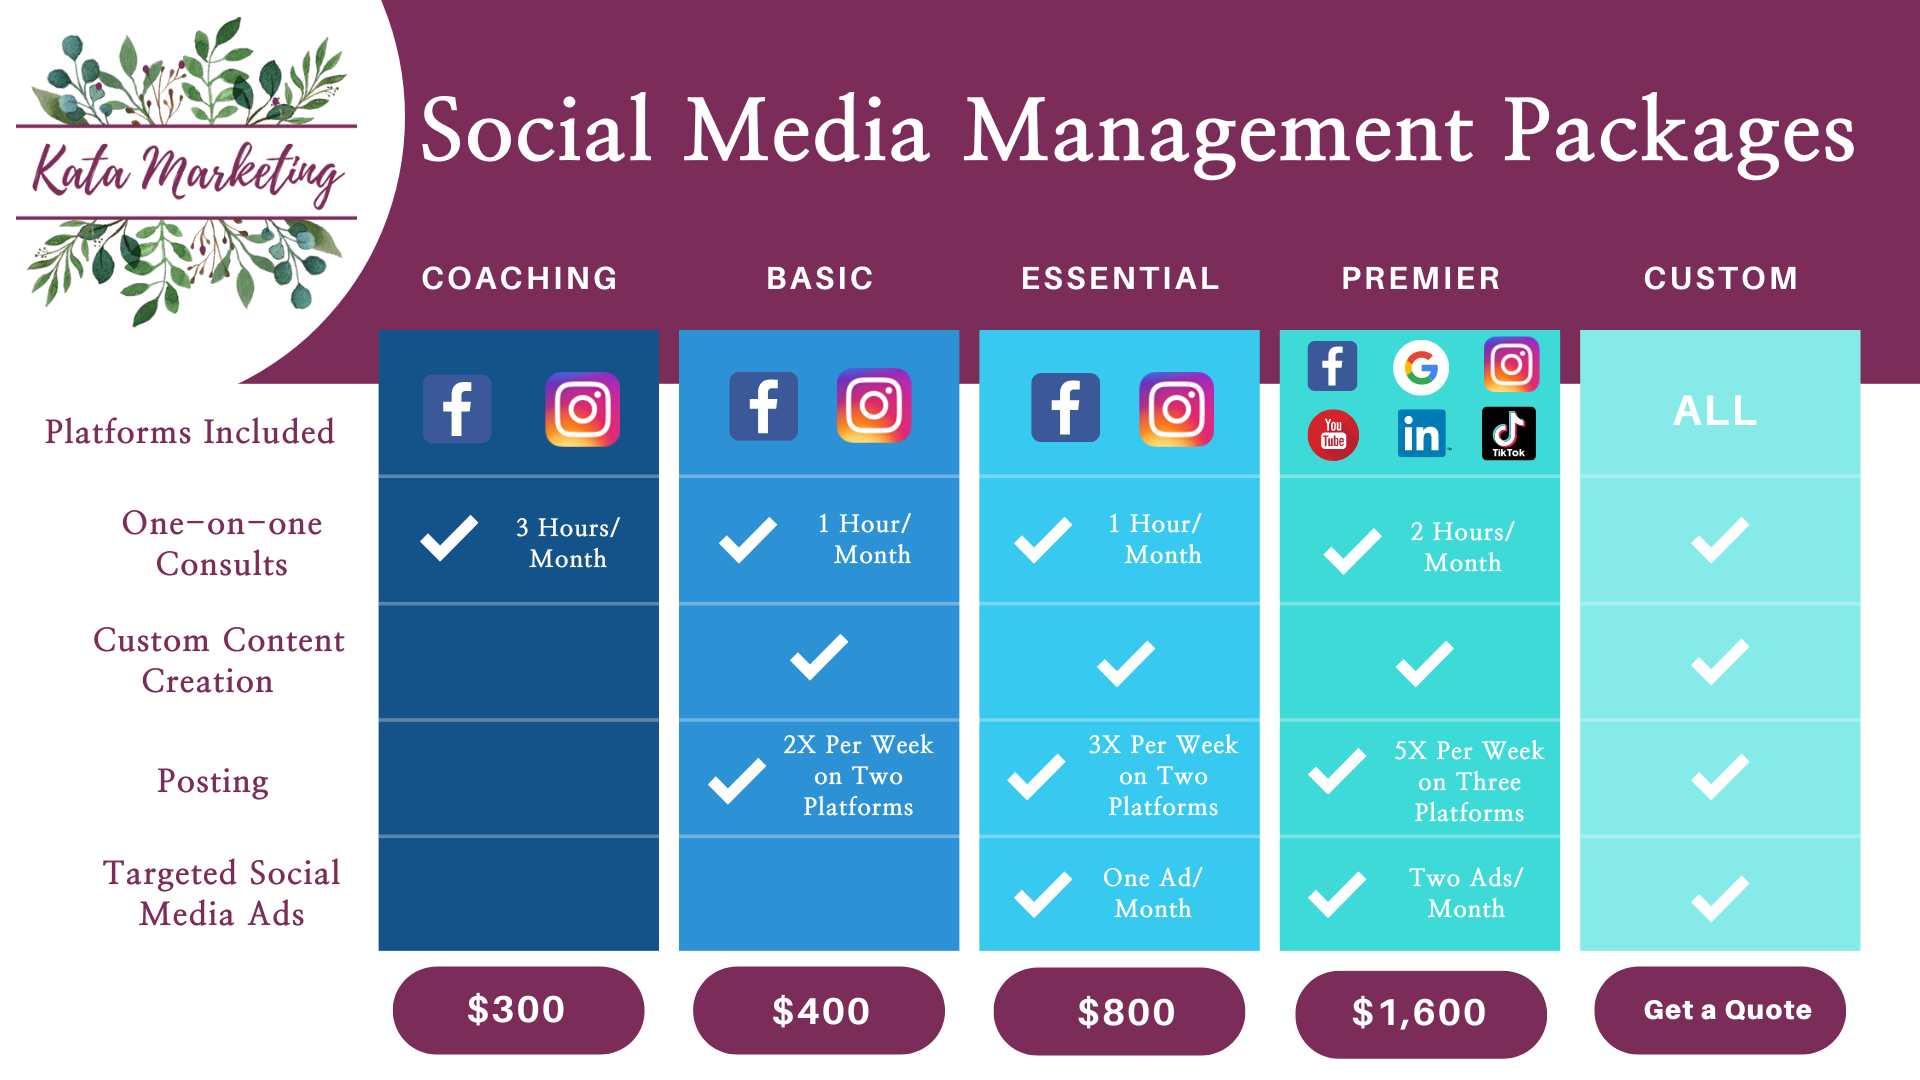 Kata Marketing Social Media Management